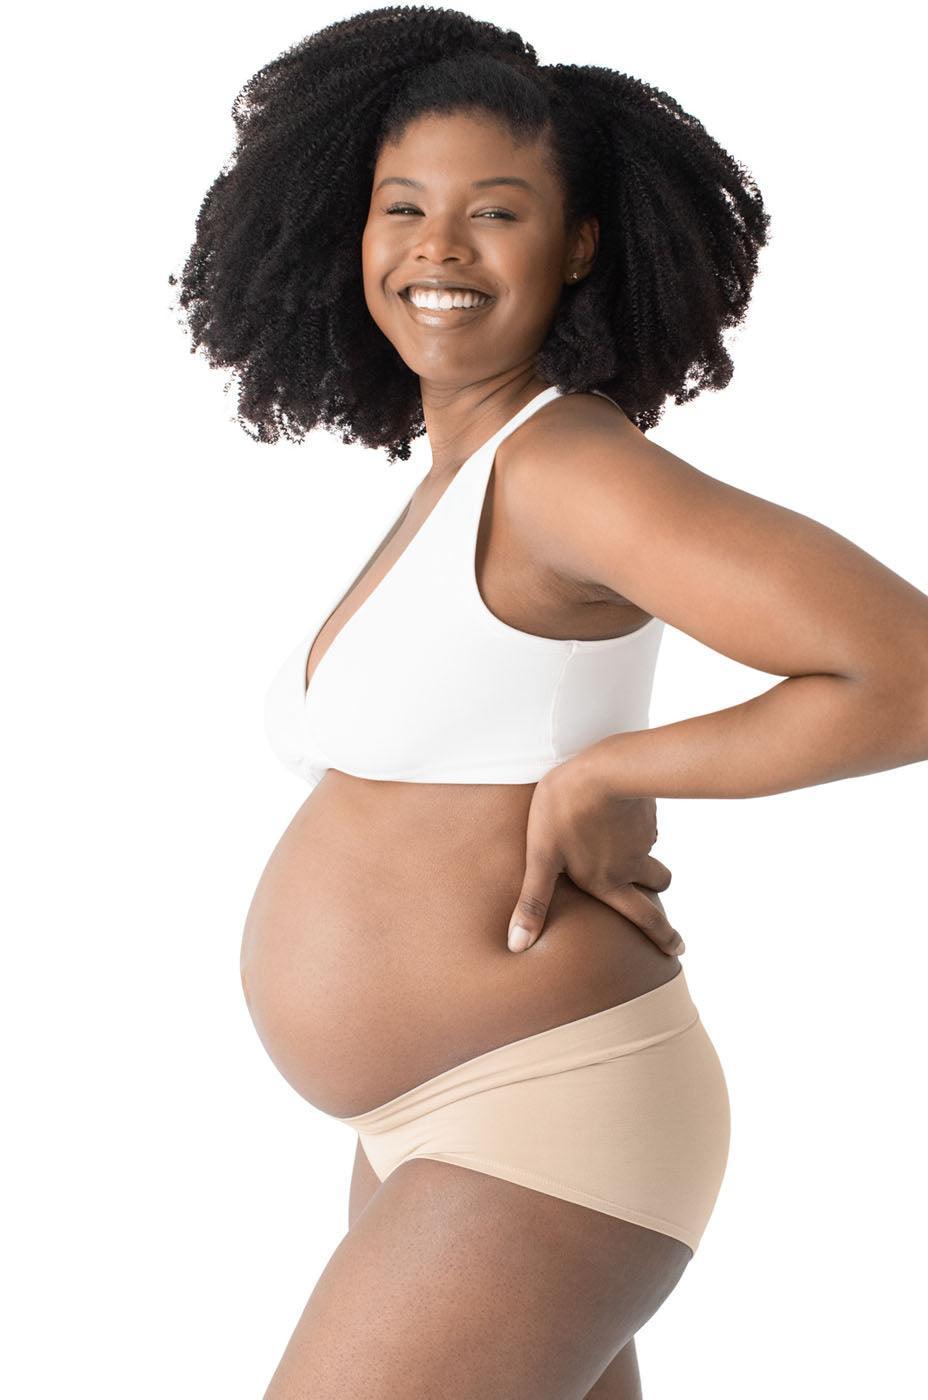 Pregnancy Maternity Soft Cotton Panty, Pregnant underwear, Maternity Panty